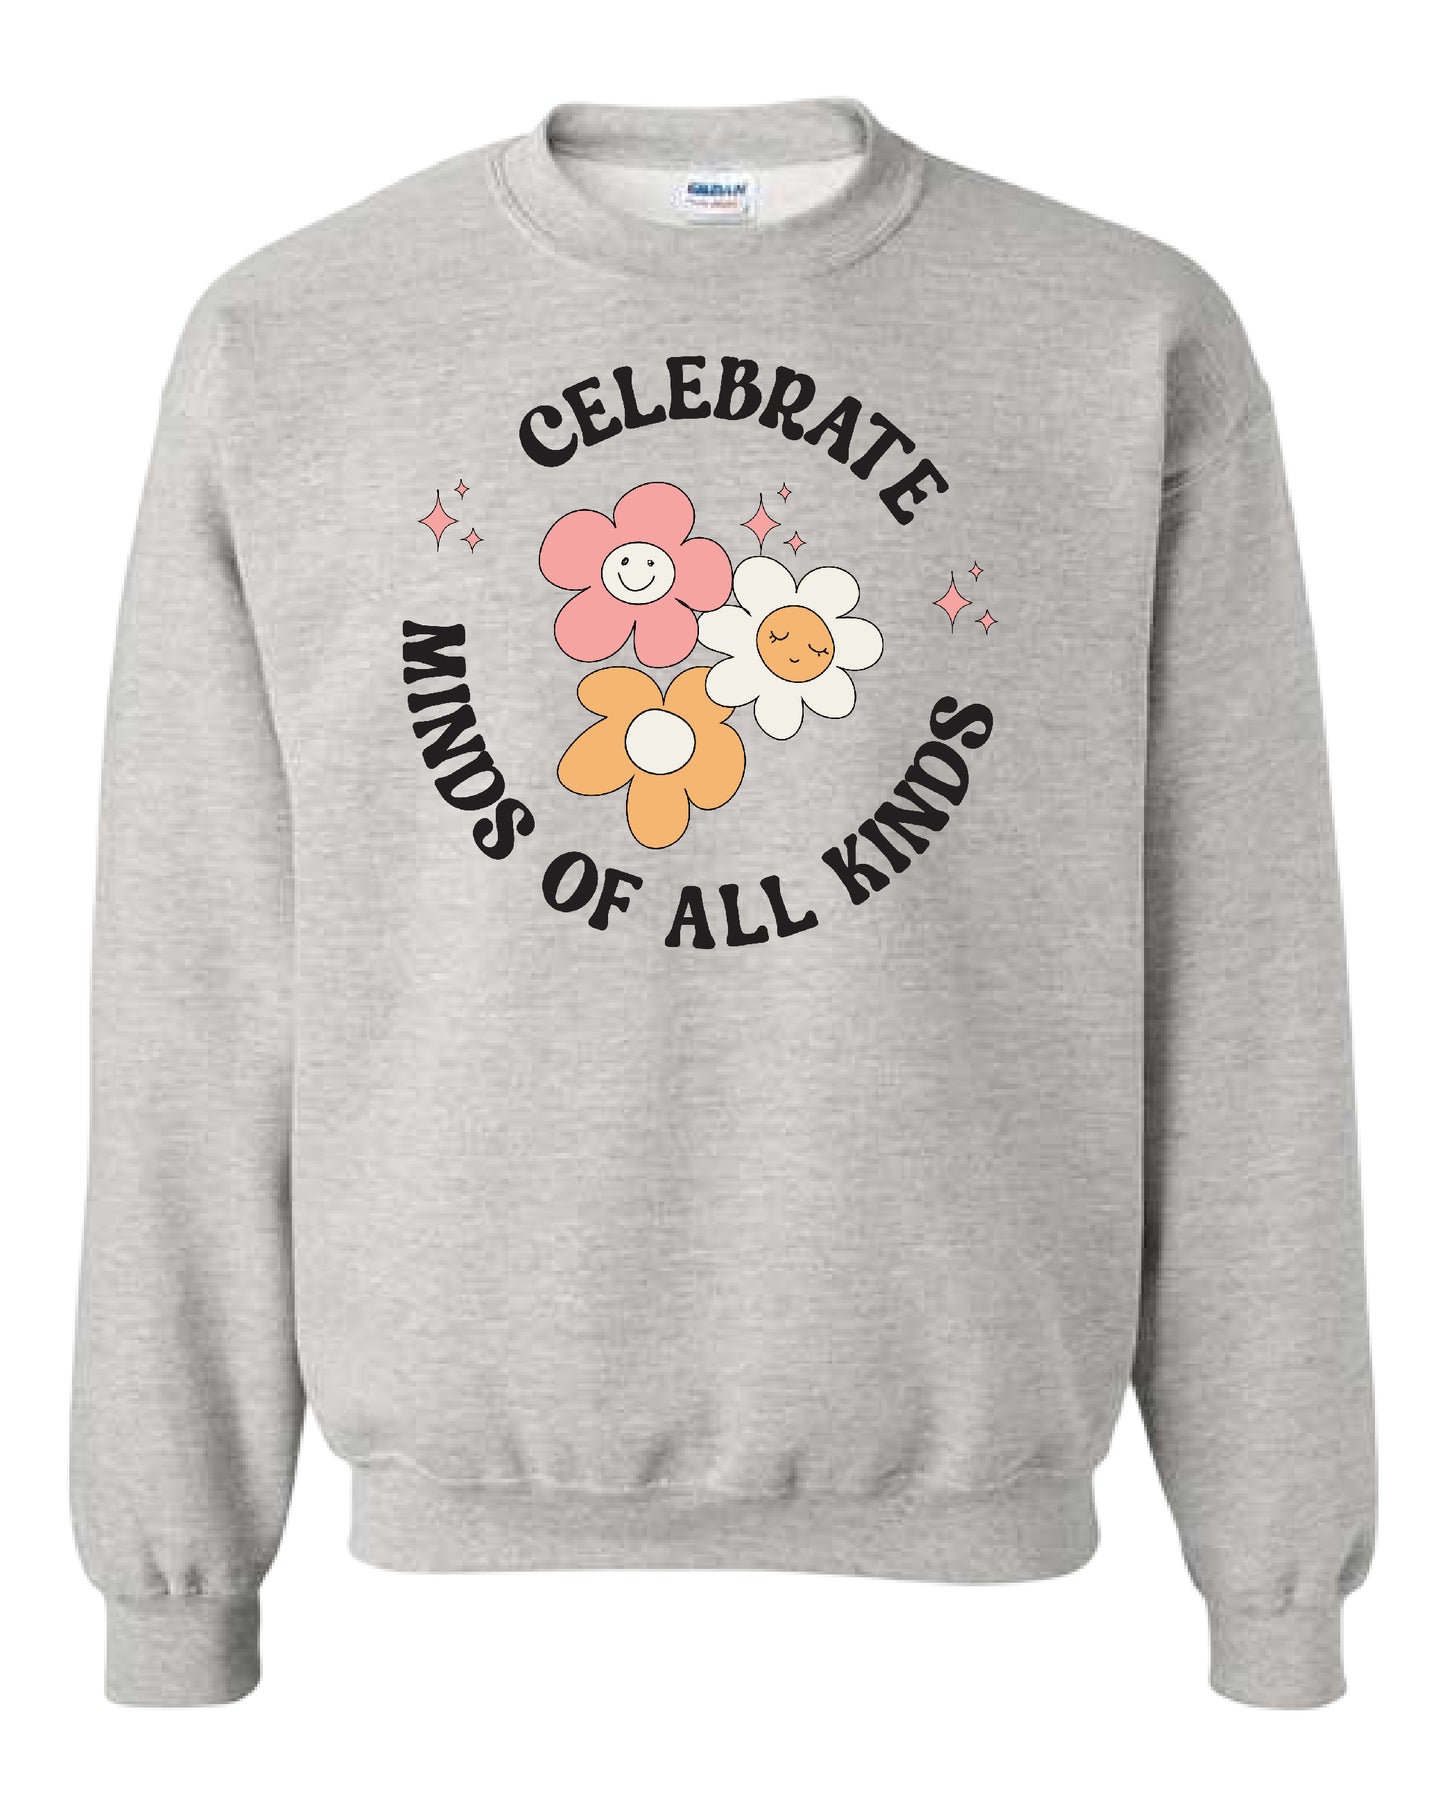 Celebrate Minds Of All Kinds Sweatshirt